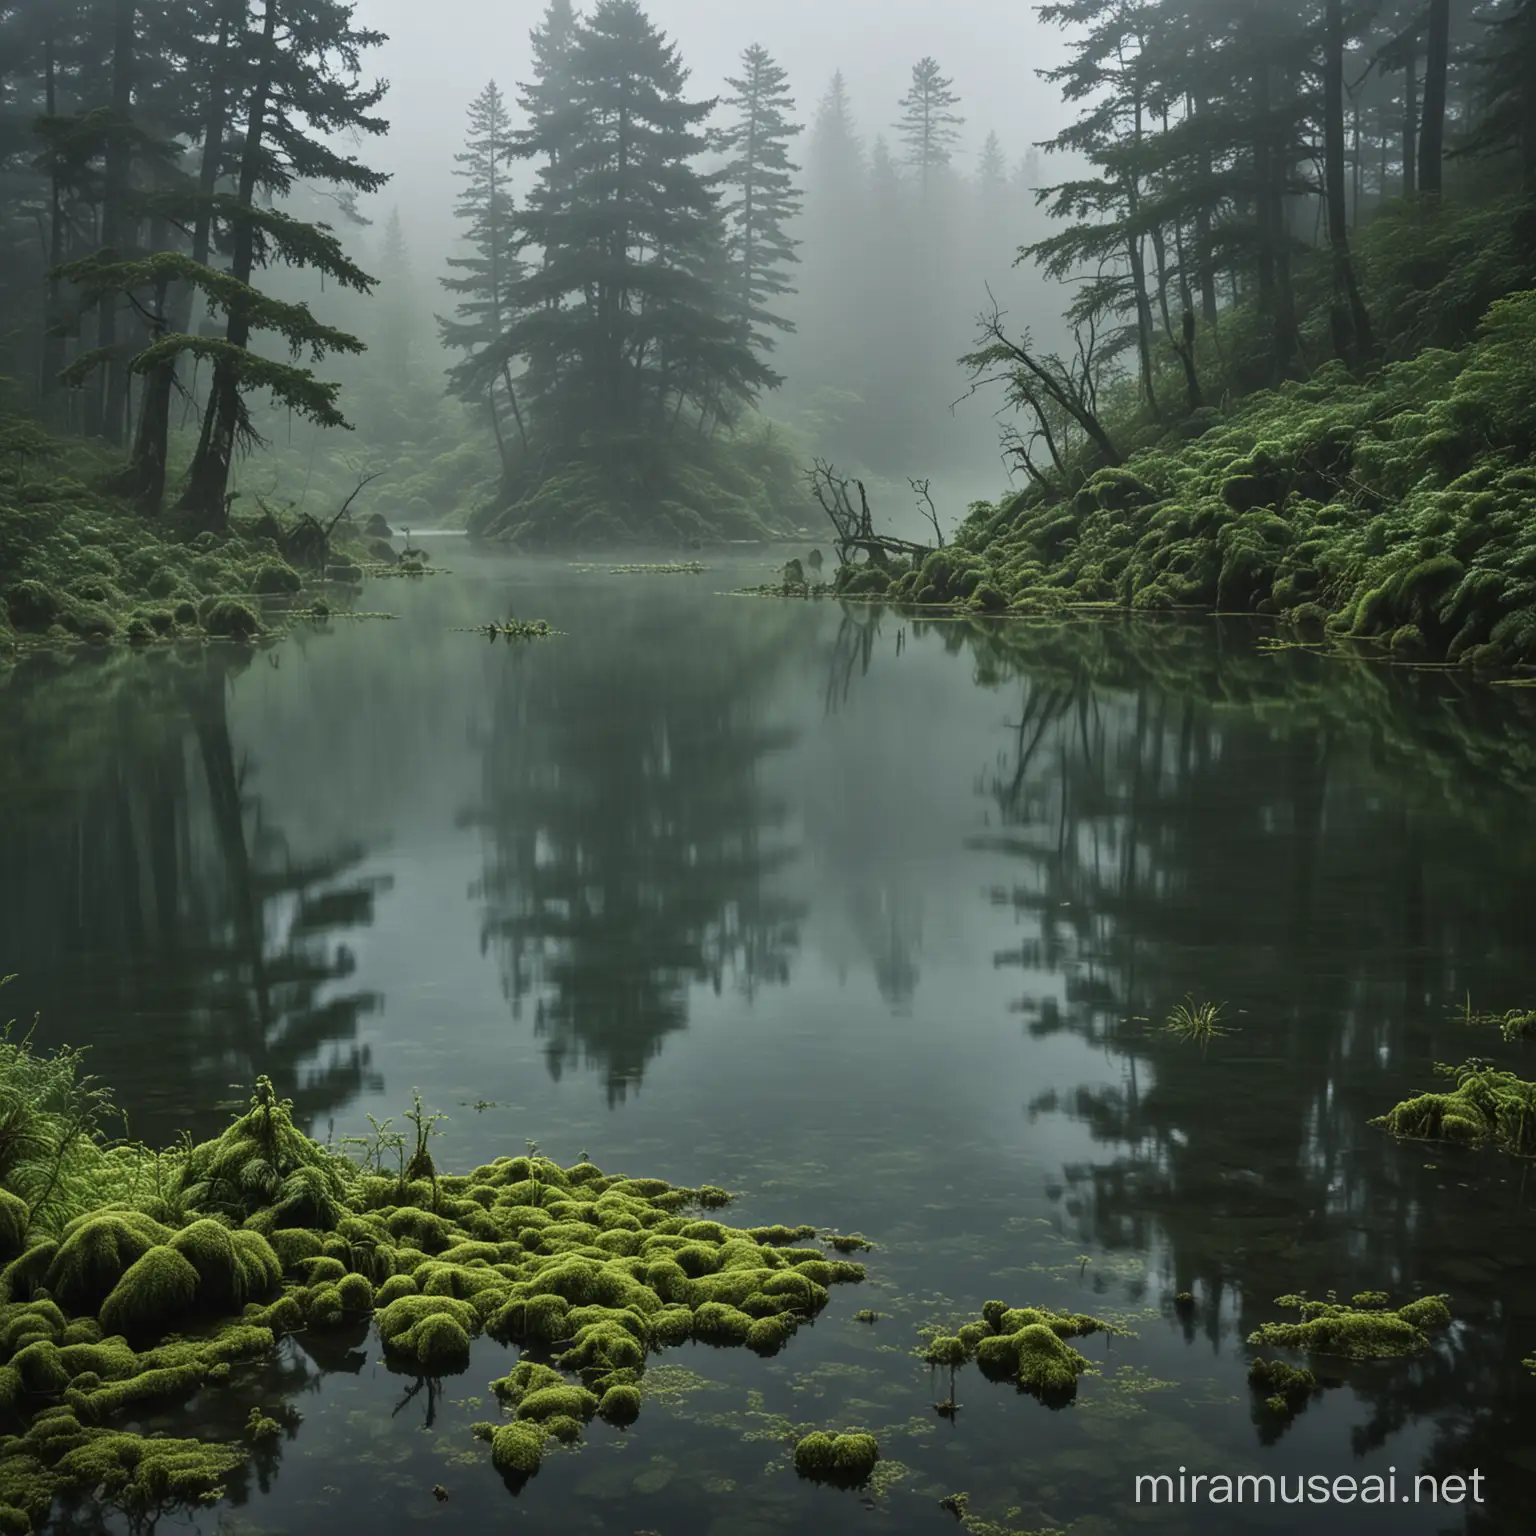 Faelight Lake Mystical Waters Turned Eerie